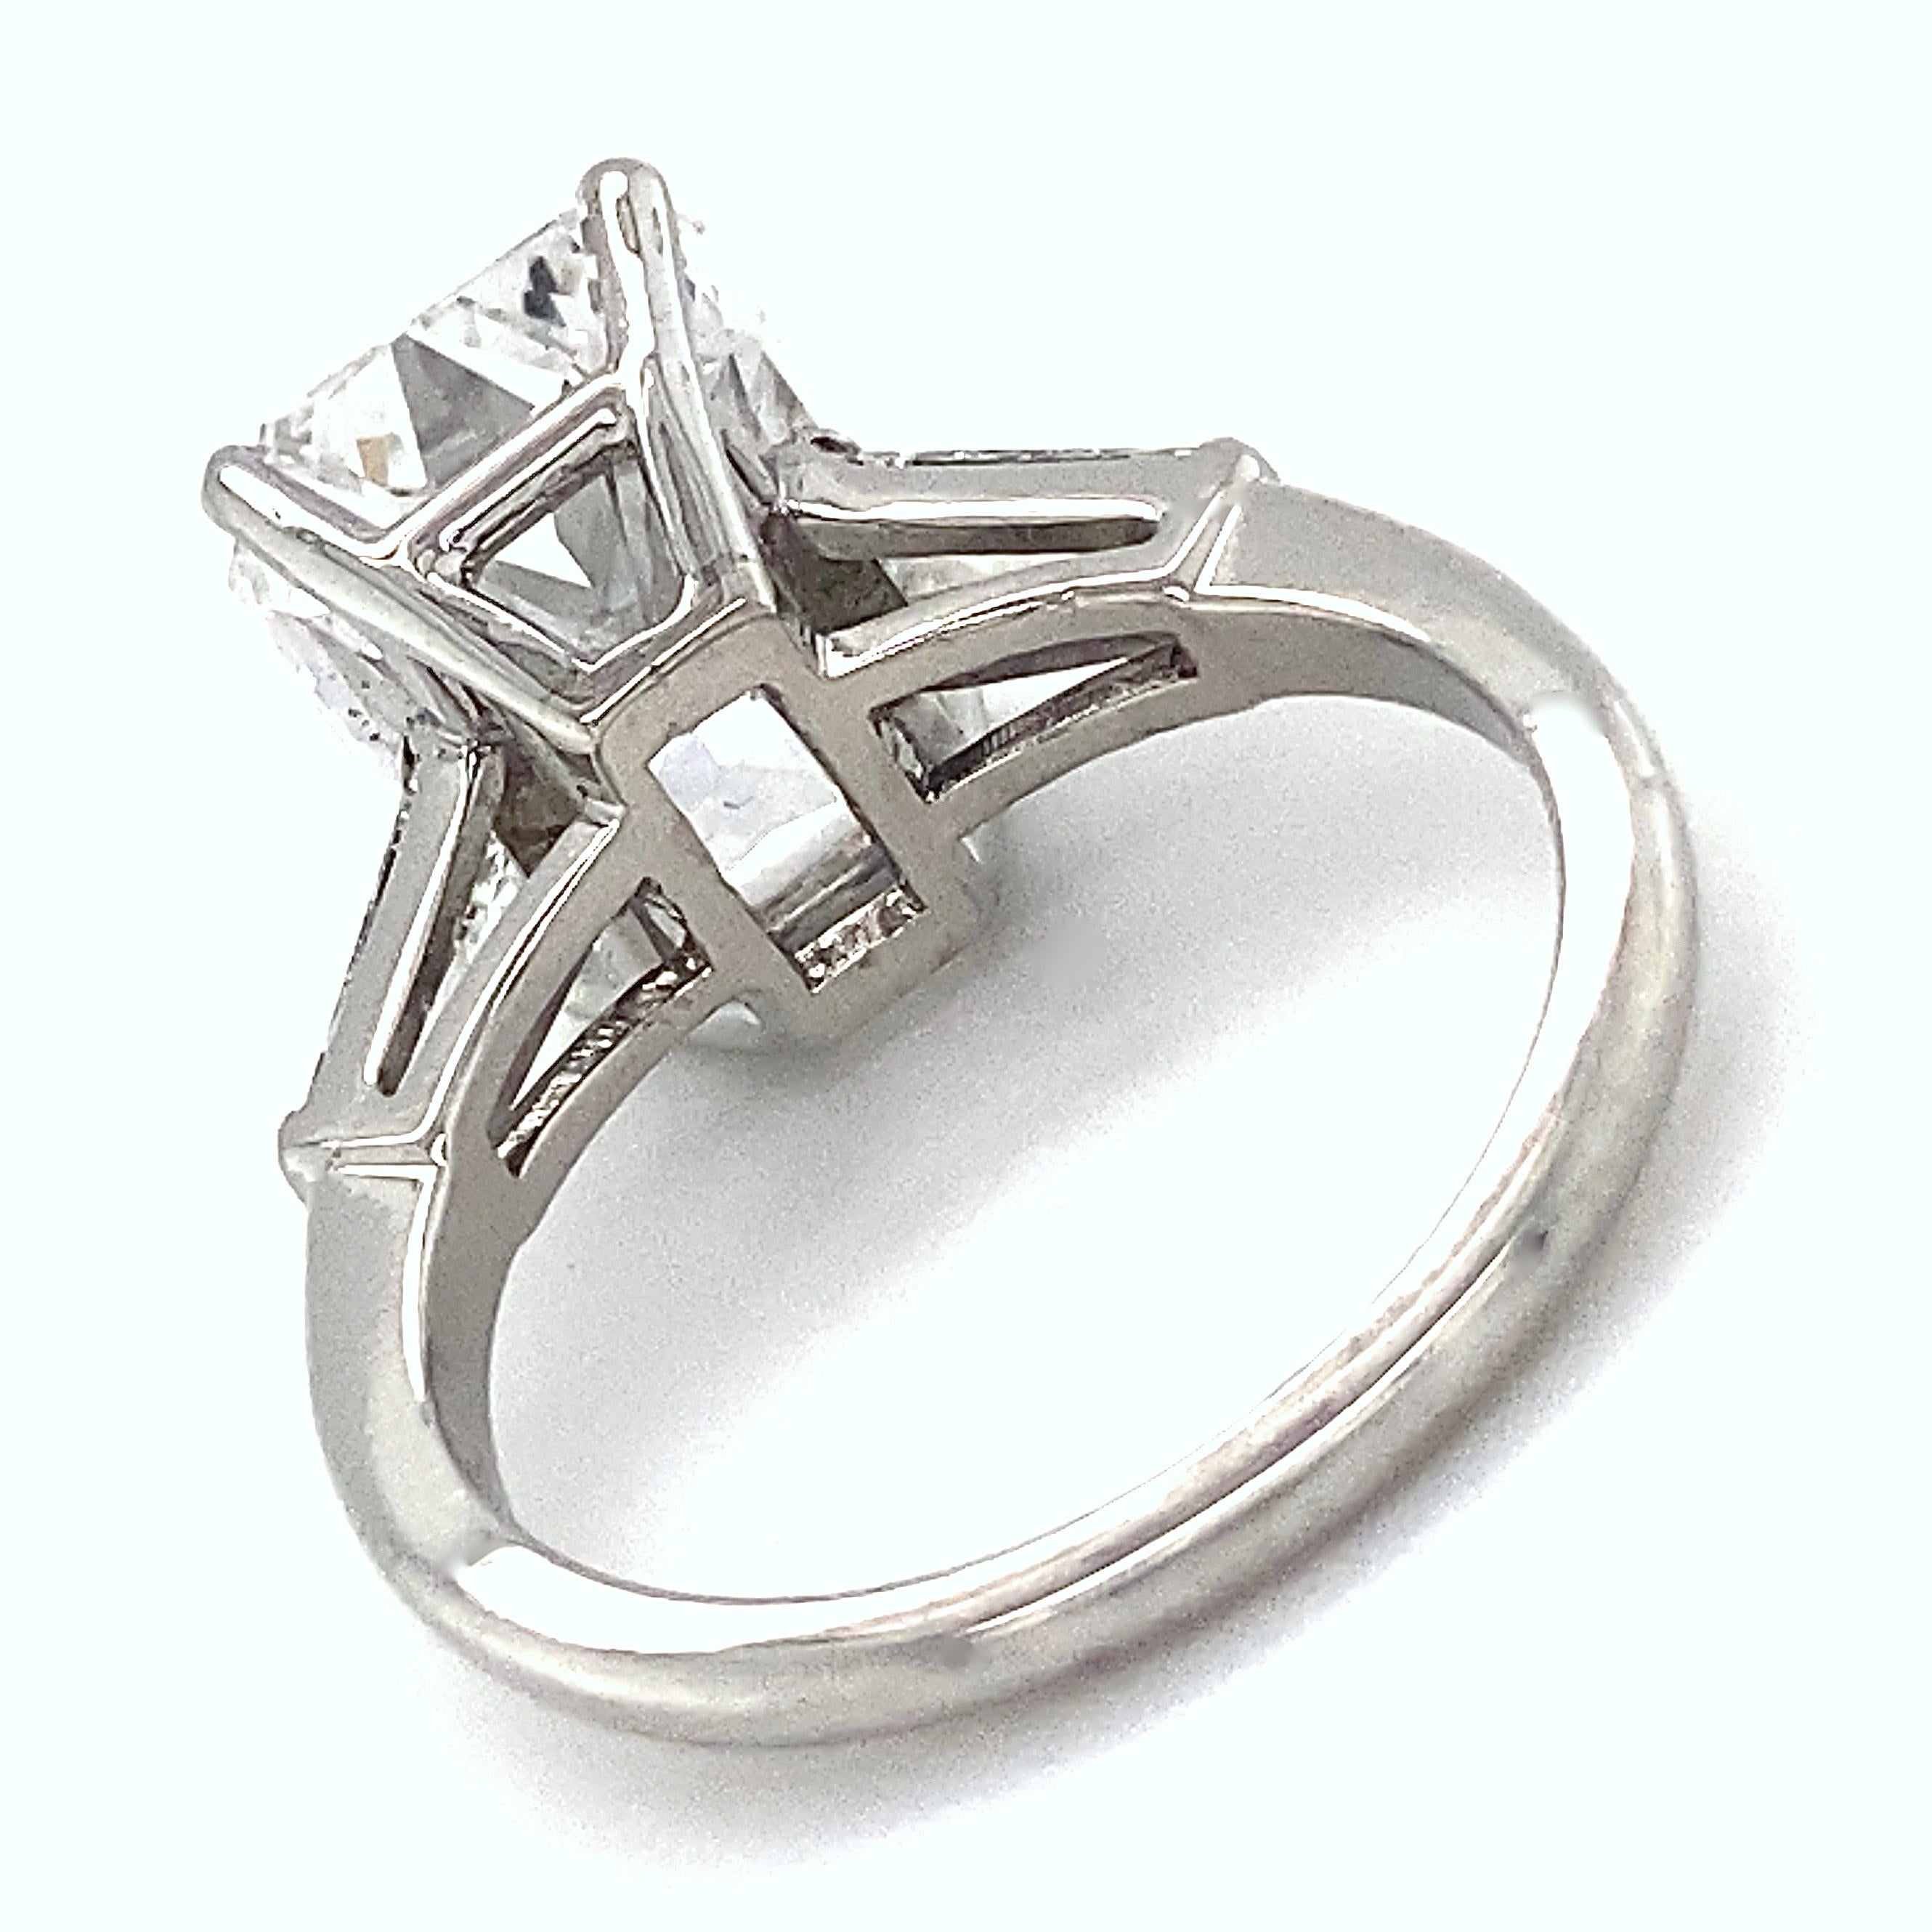 4.06 Carat E-VVS1 GIA Certified Radiant Cut Diamond in Deco-Era Platinum Ring 12